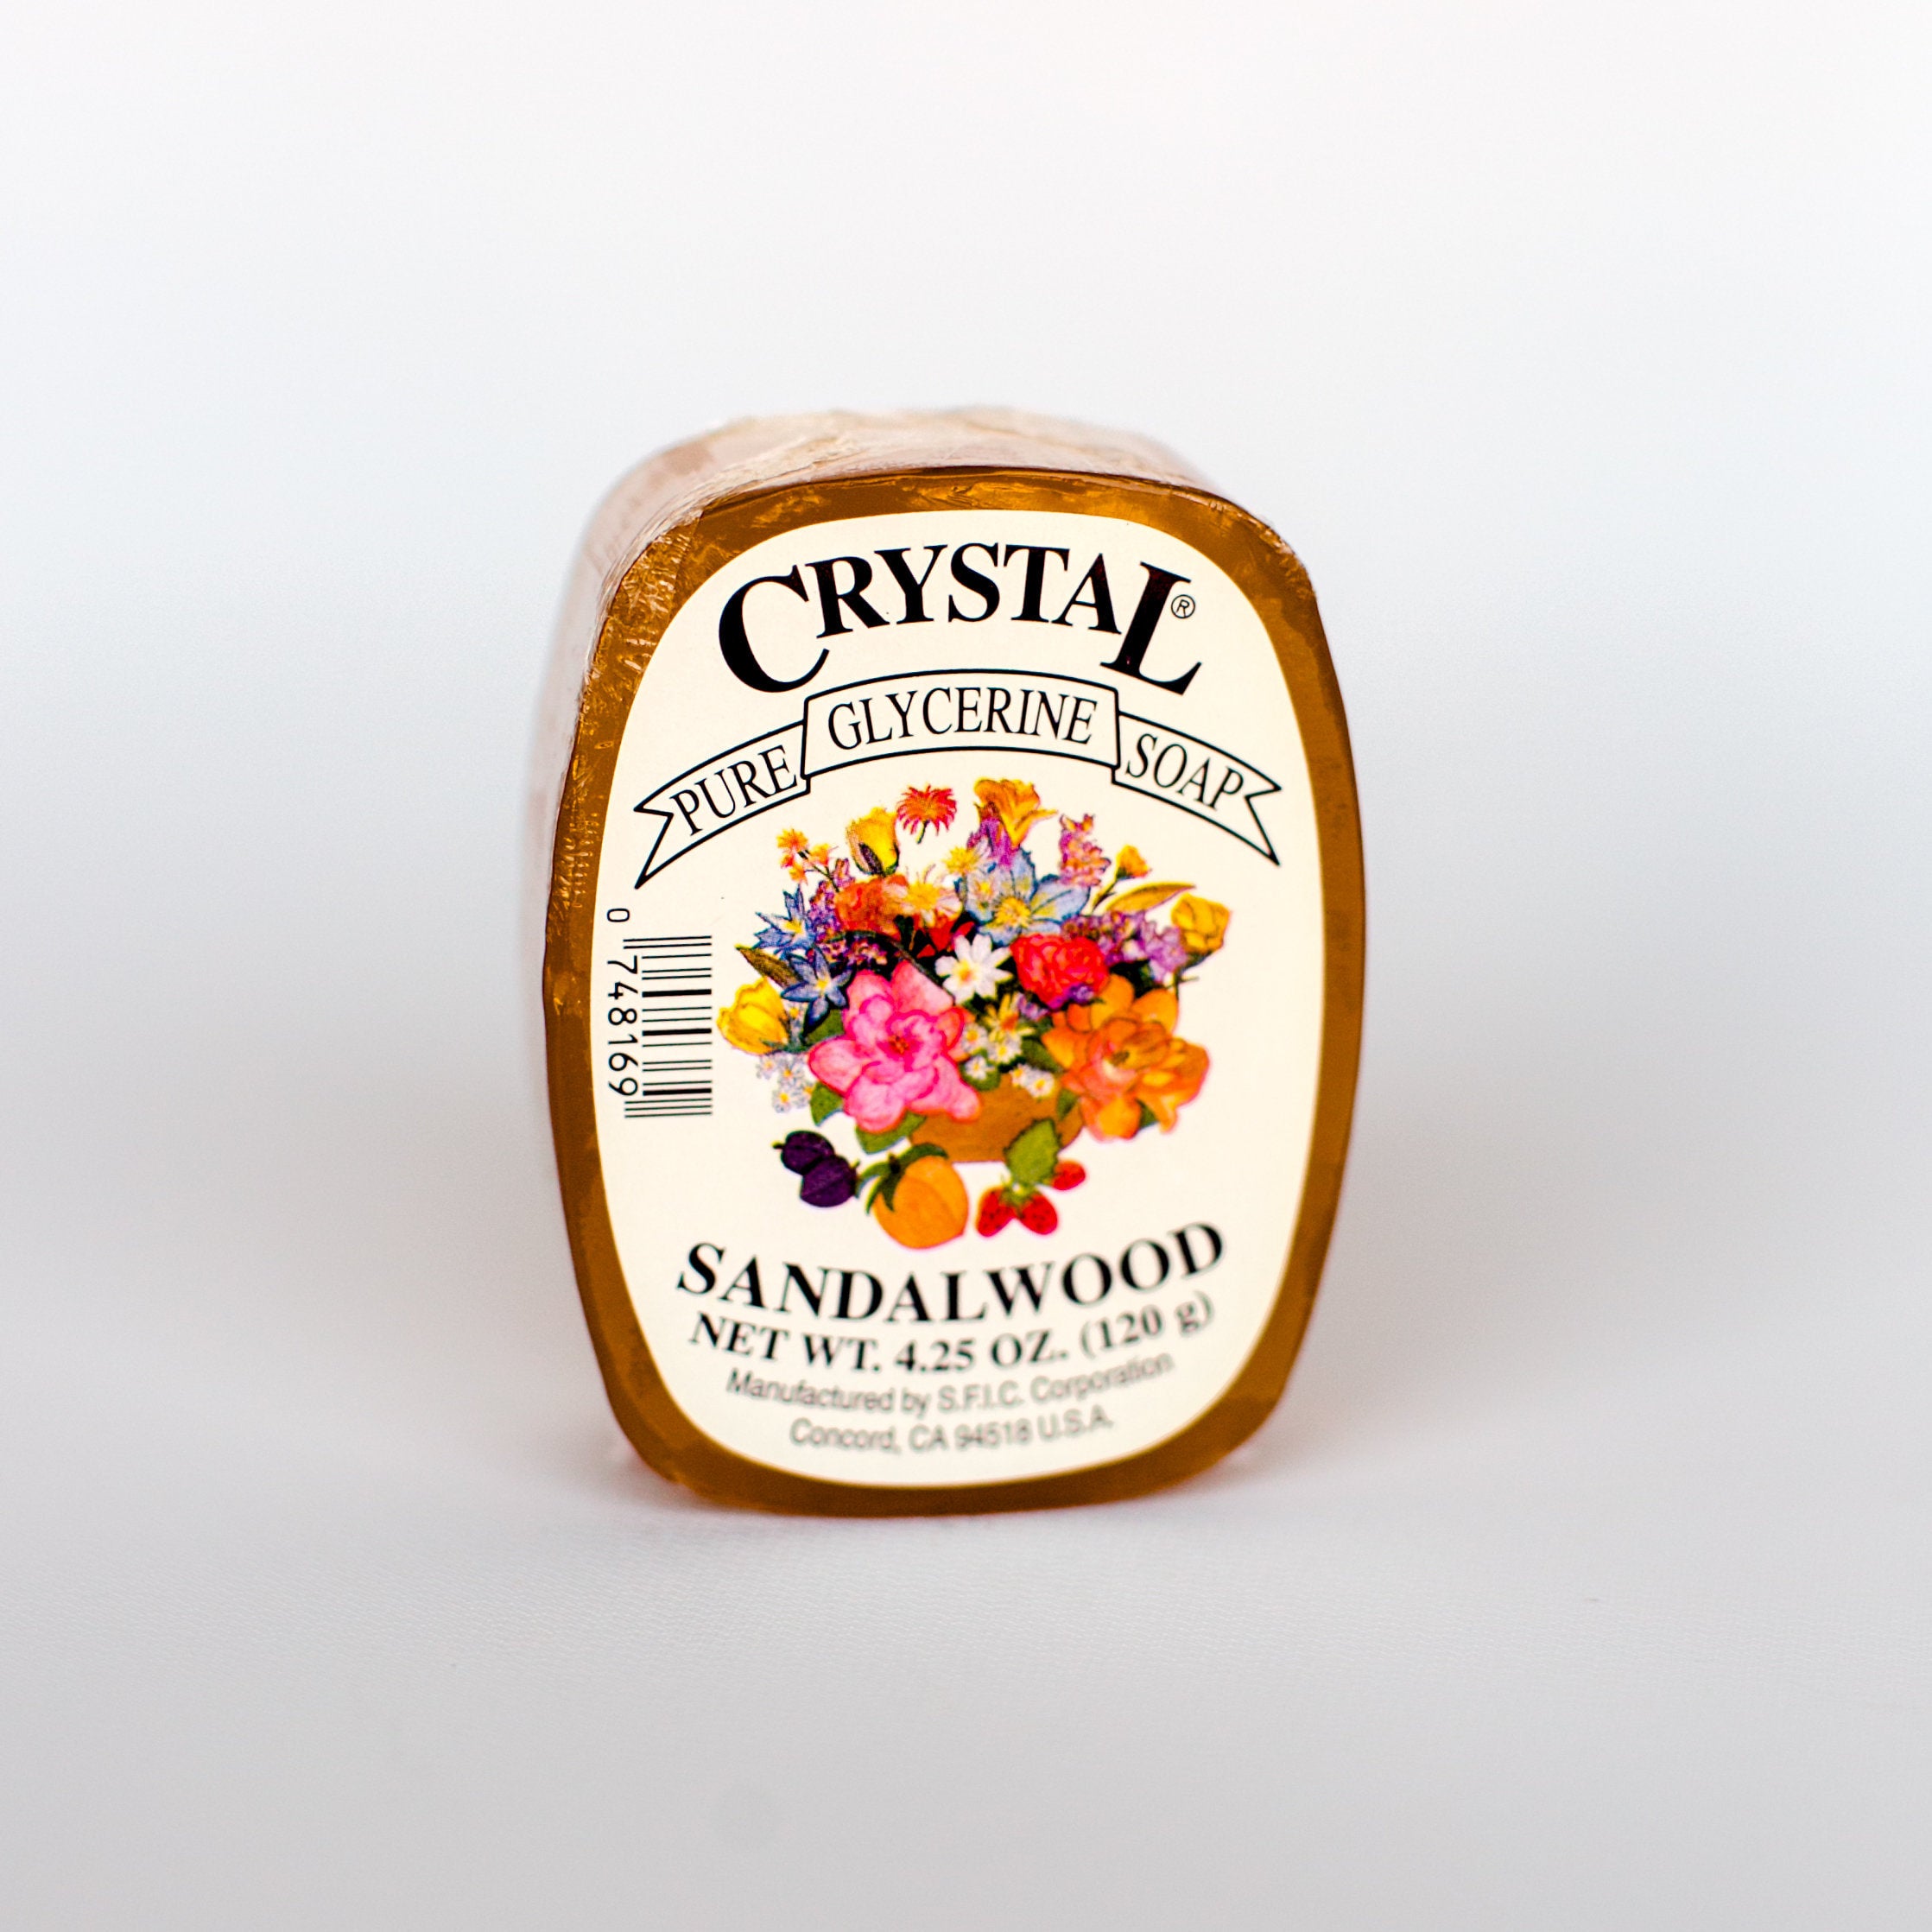 Sandalwood Bourbon Honeybee Glycerin Soap